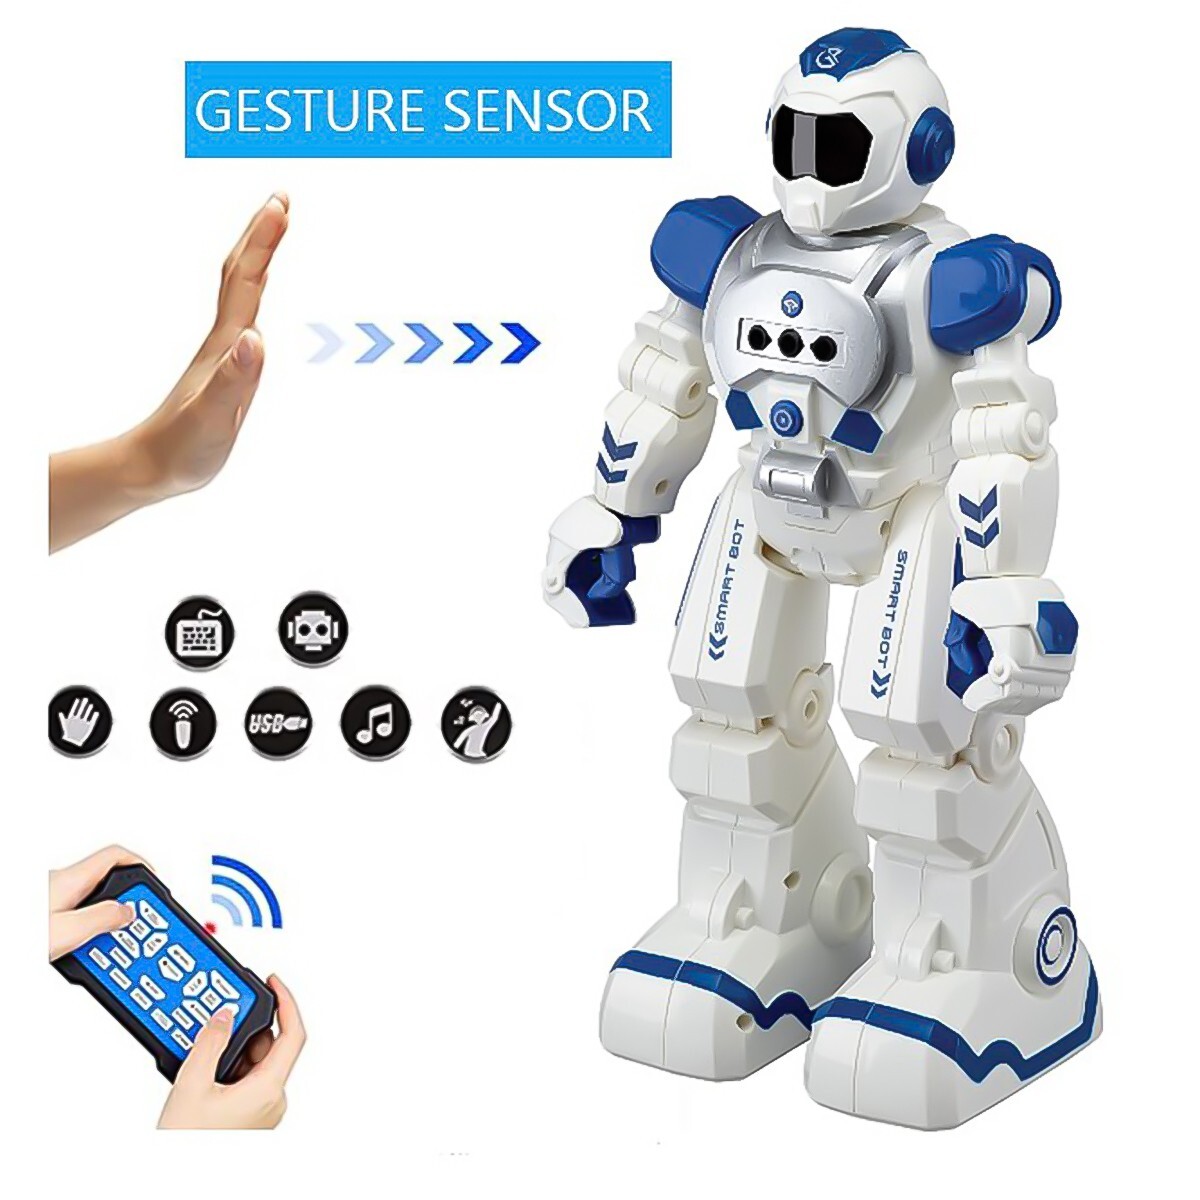 Skid Fusion Remote Control Gesture Robot DN2001